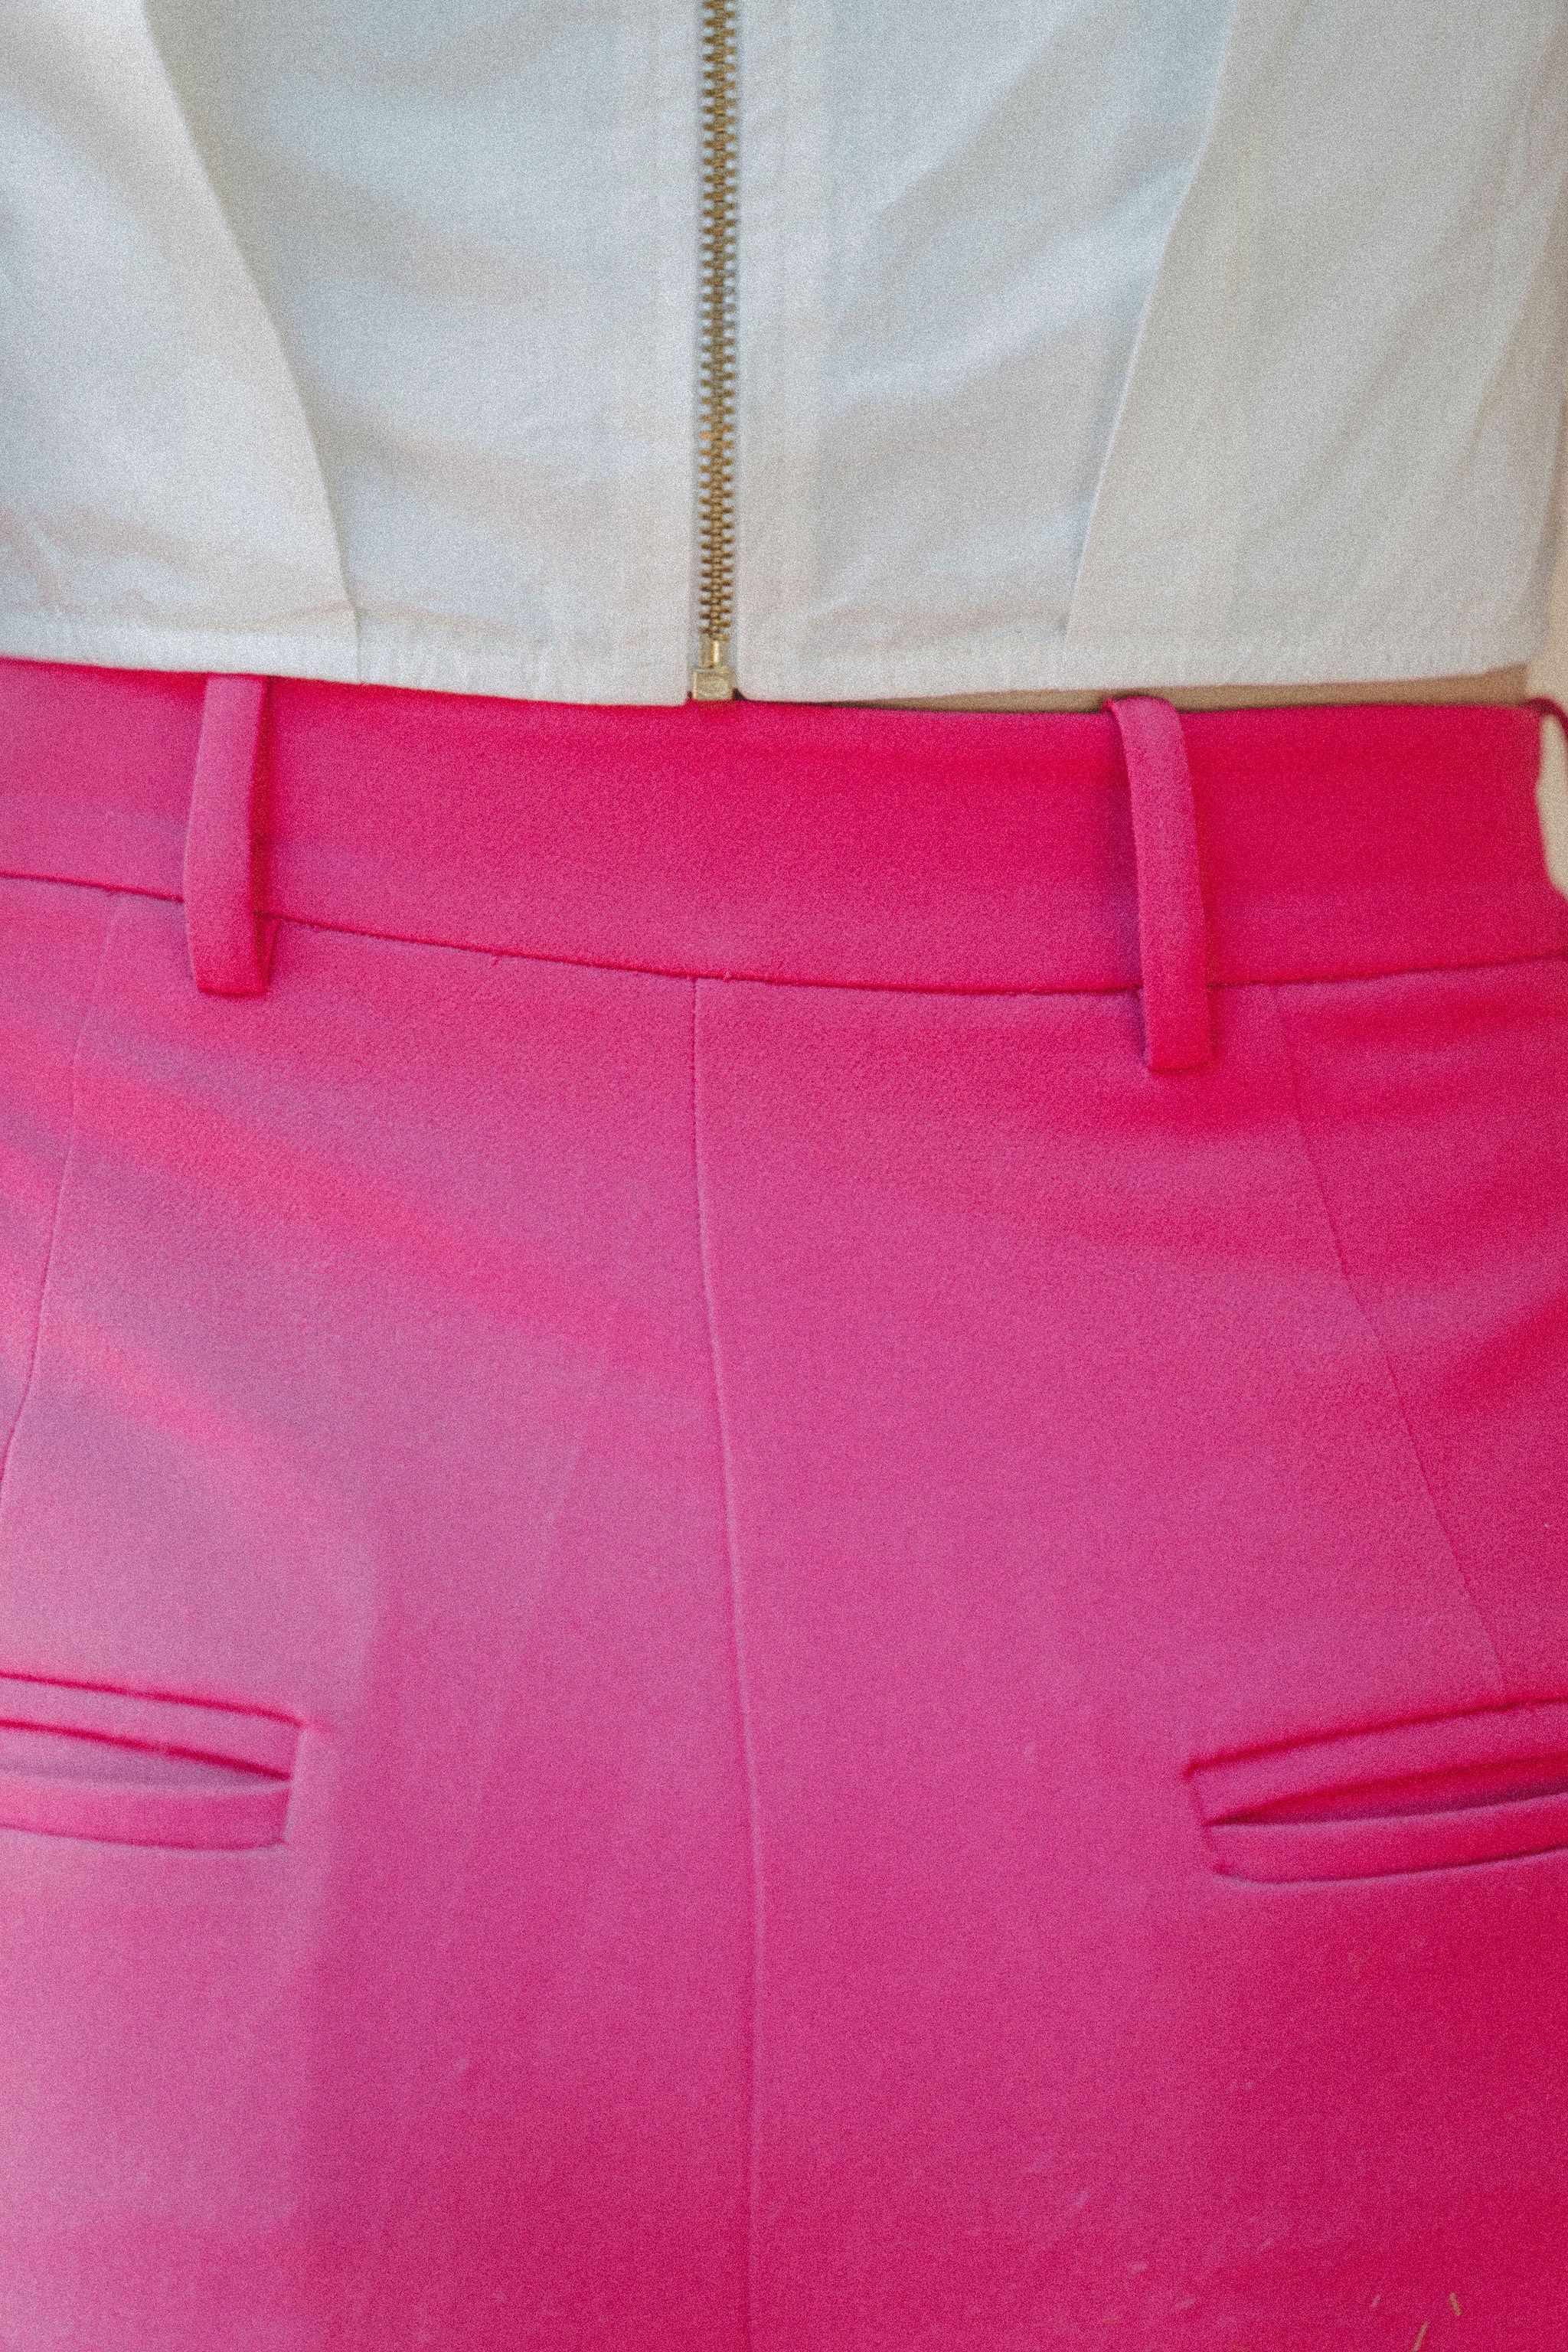 back detail of pink shorts